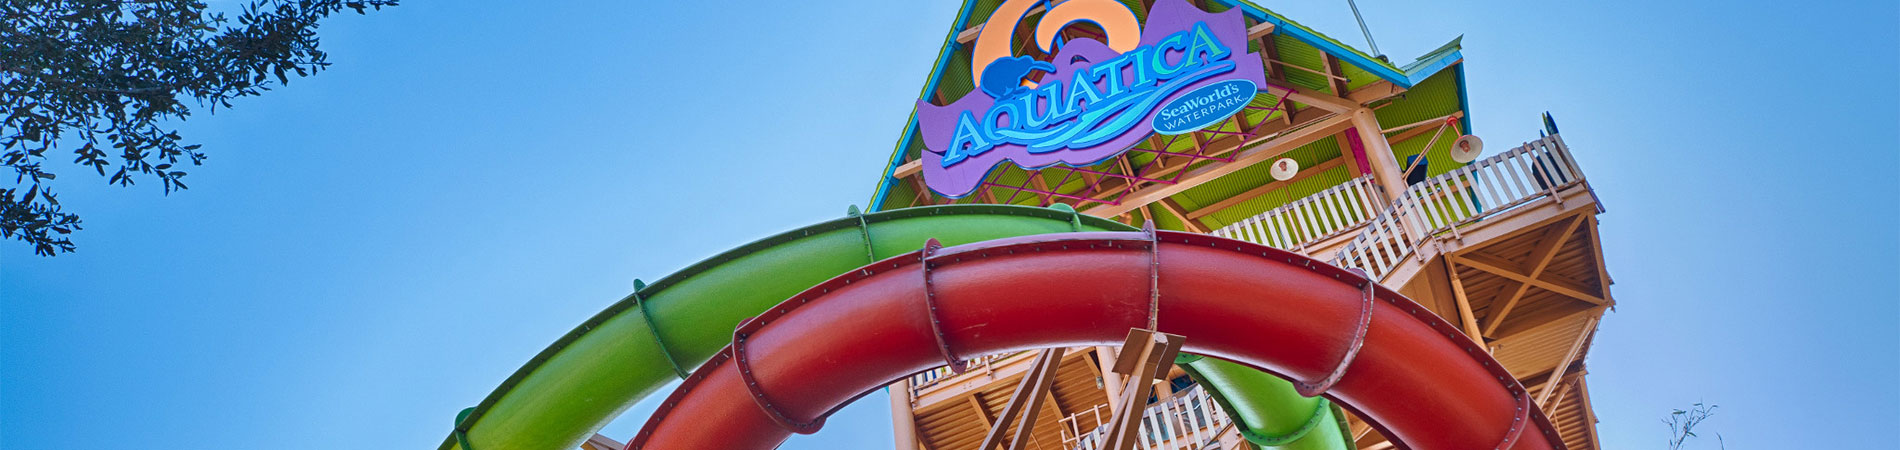 Slide and play at Aquatica, SeaWorld's water park in Orlando, Florida.